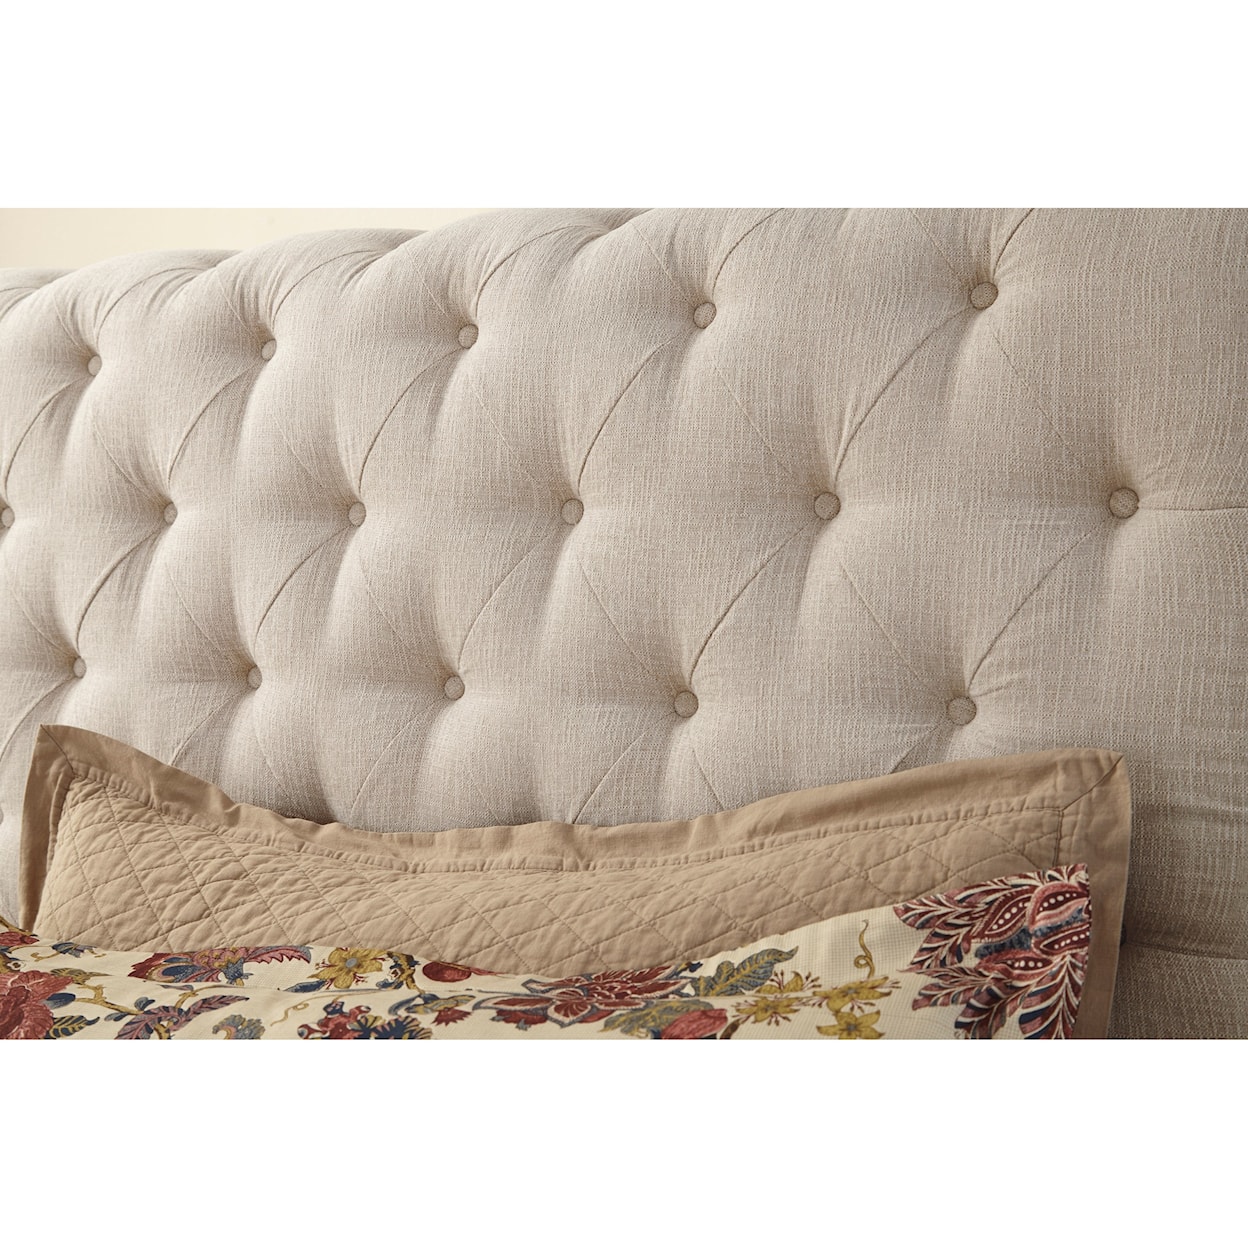 Ashley Furniture Signature Design Willenburg Queen Upholstered Sleigh Bed